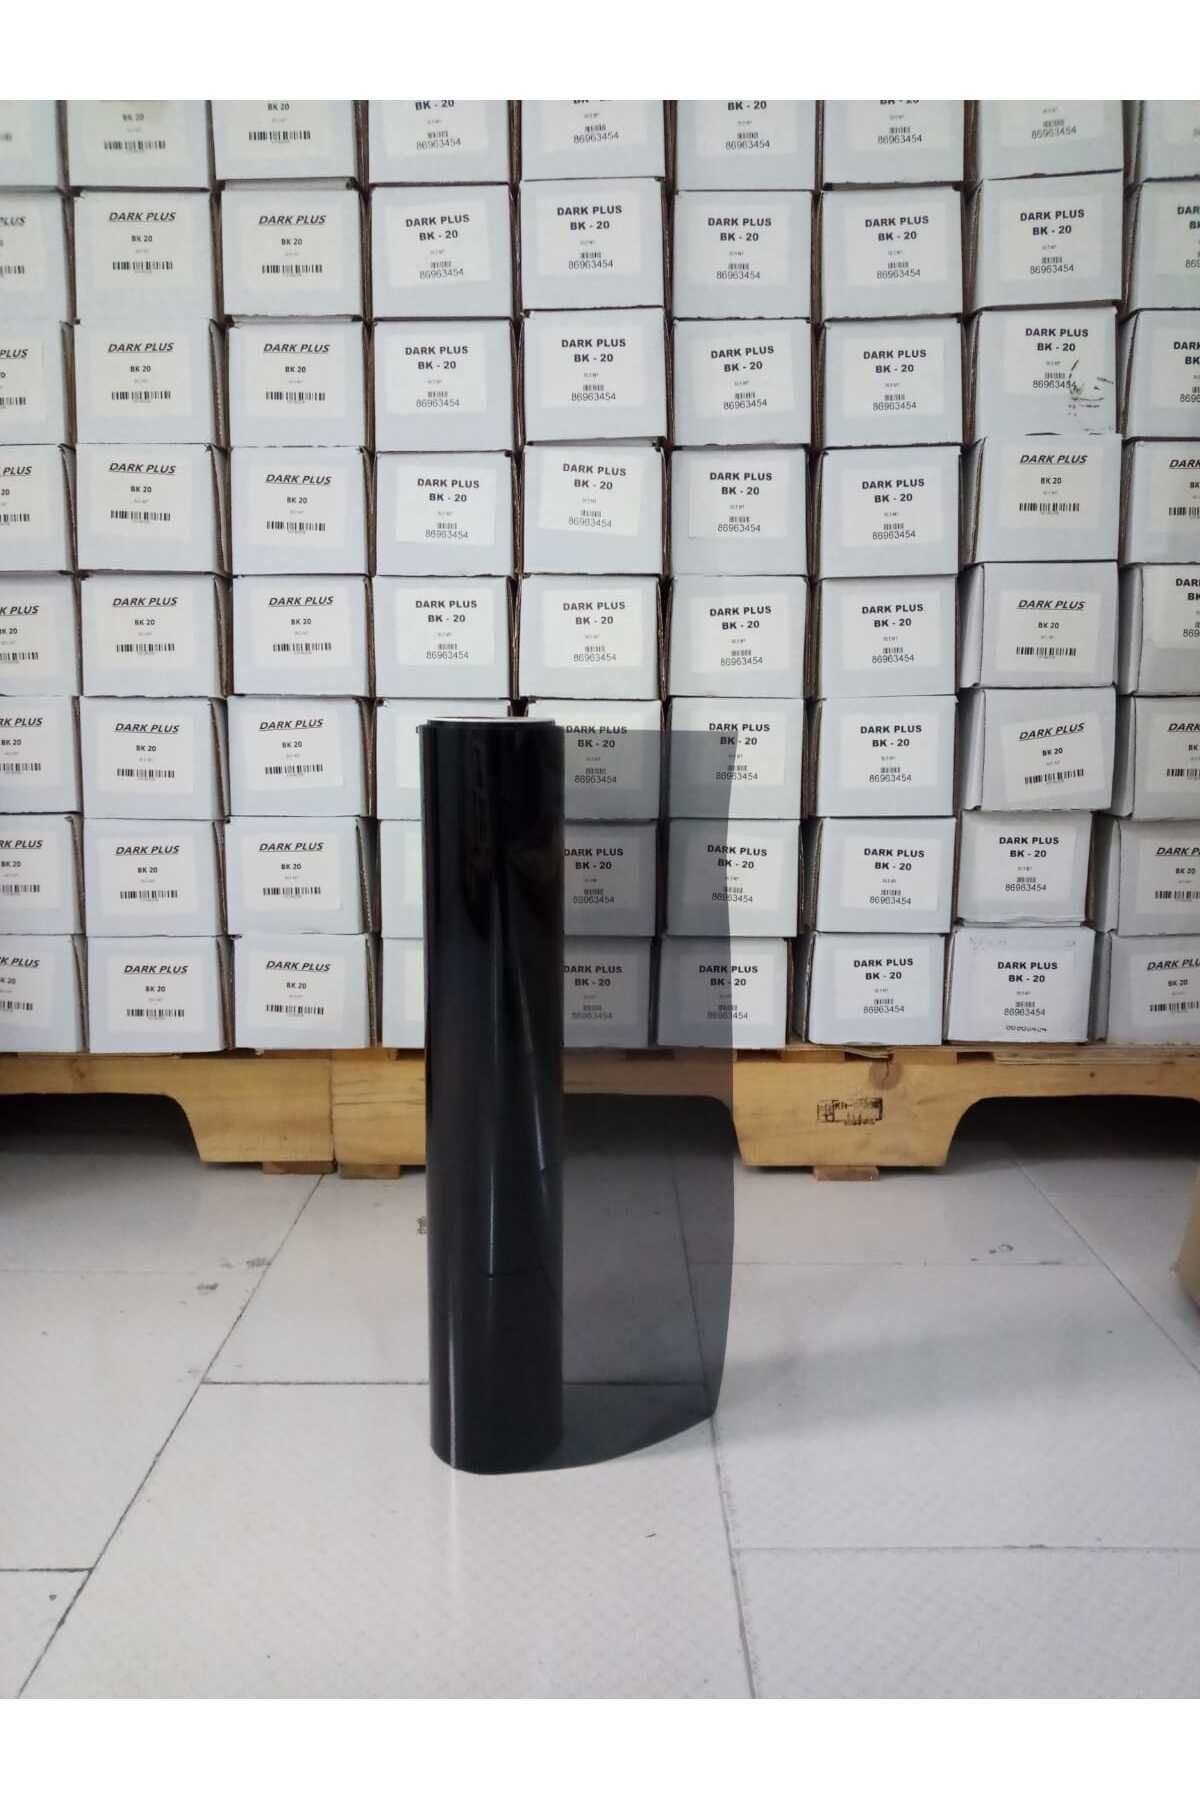 DARK PLUS % 05 Siyah Koyu Ton Cam Filmi (75cm X 6m) Fiyatı, Yorumları -  Trendyol